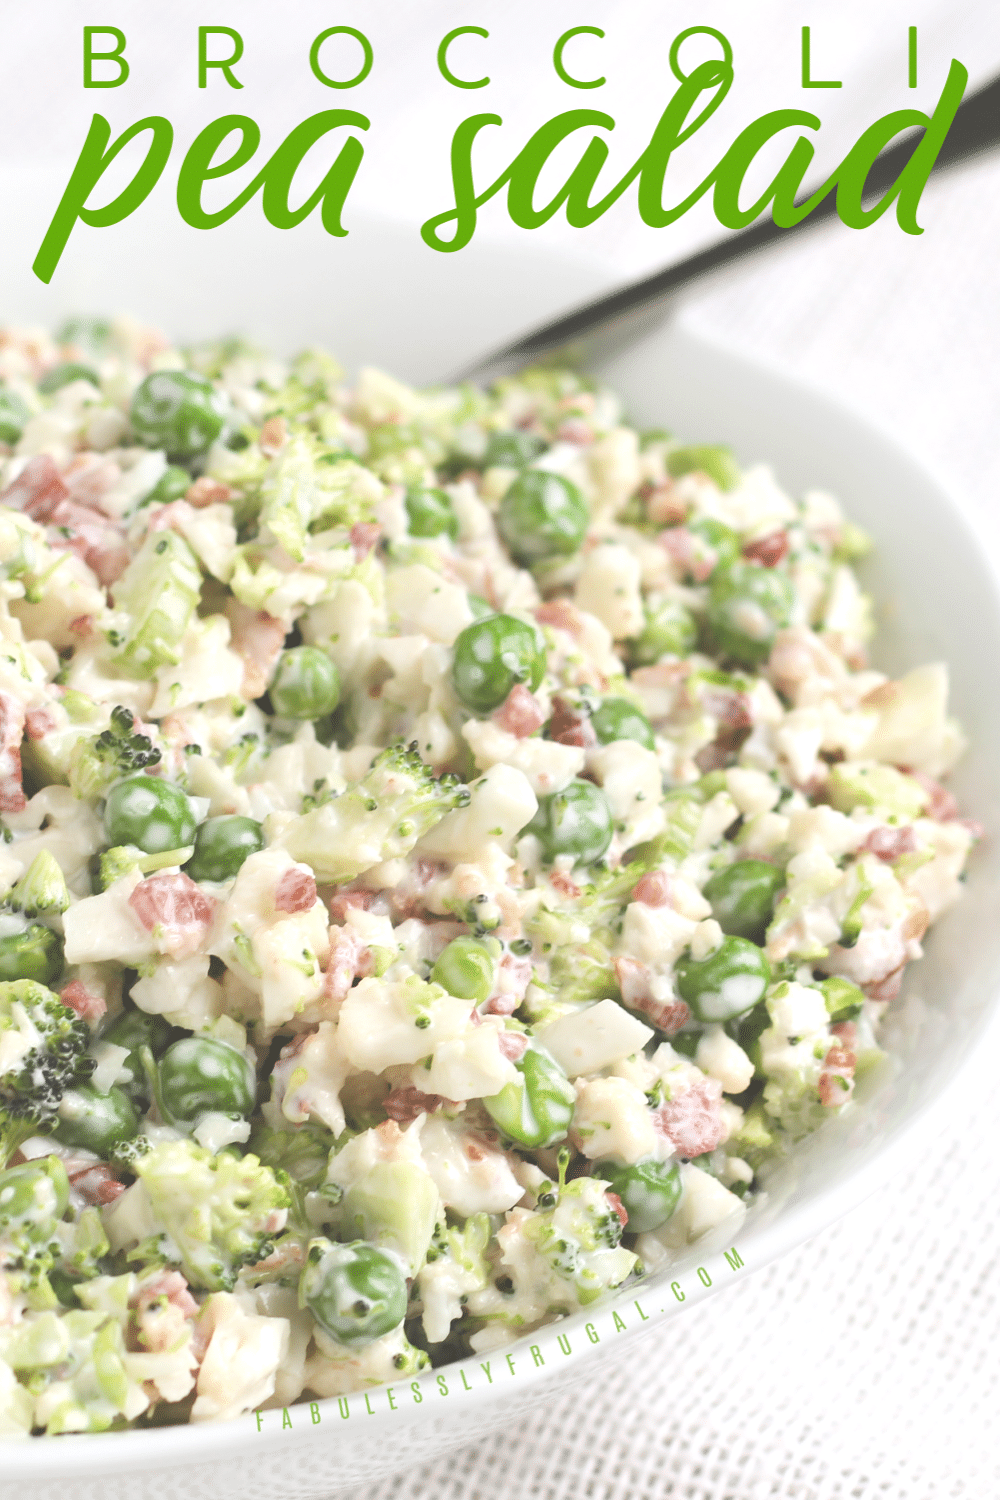 Broccoli pea salad recipe